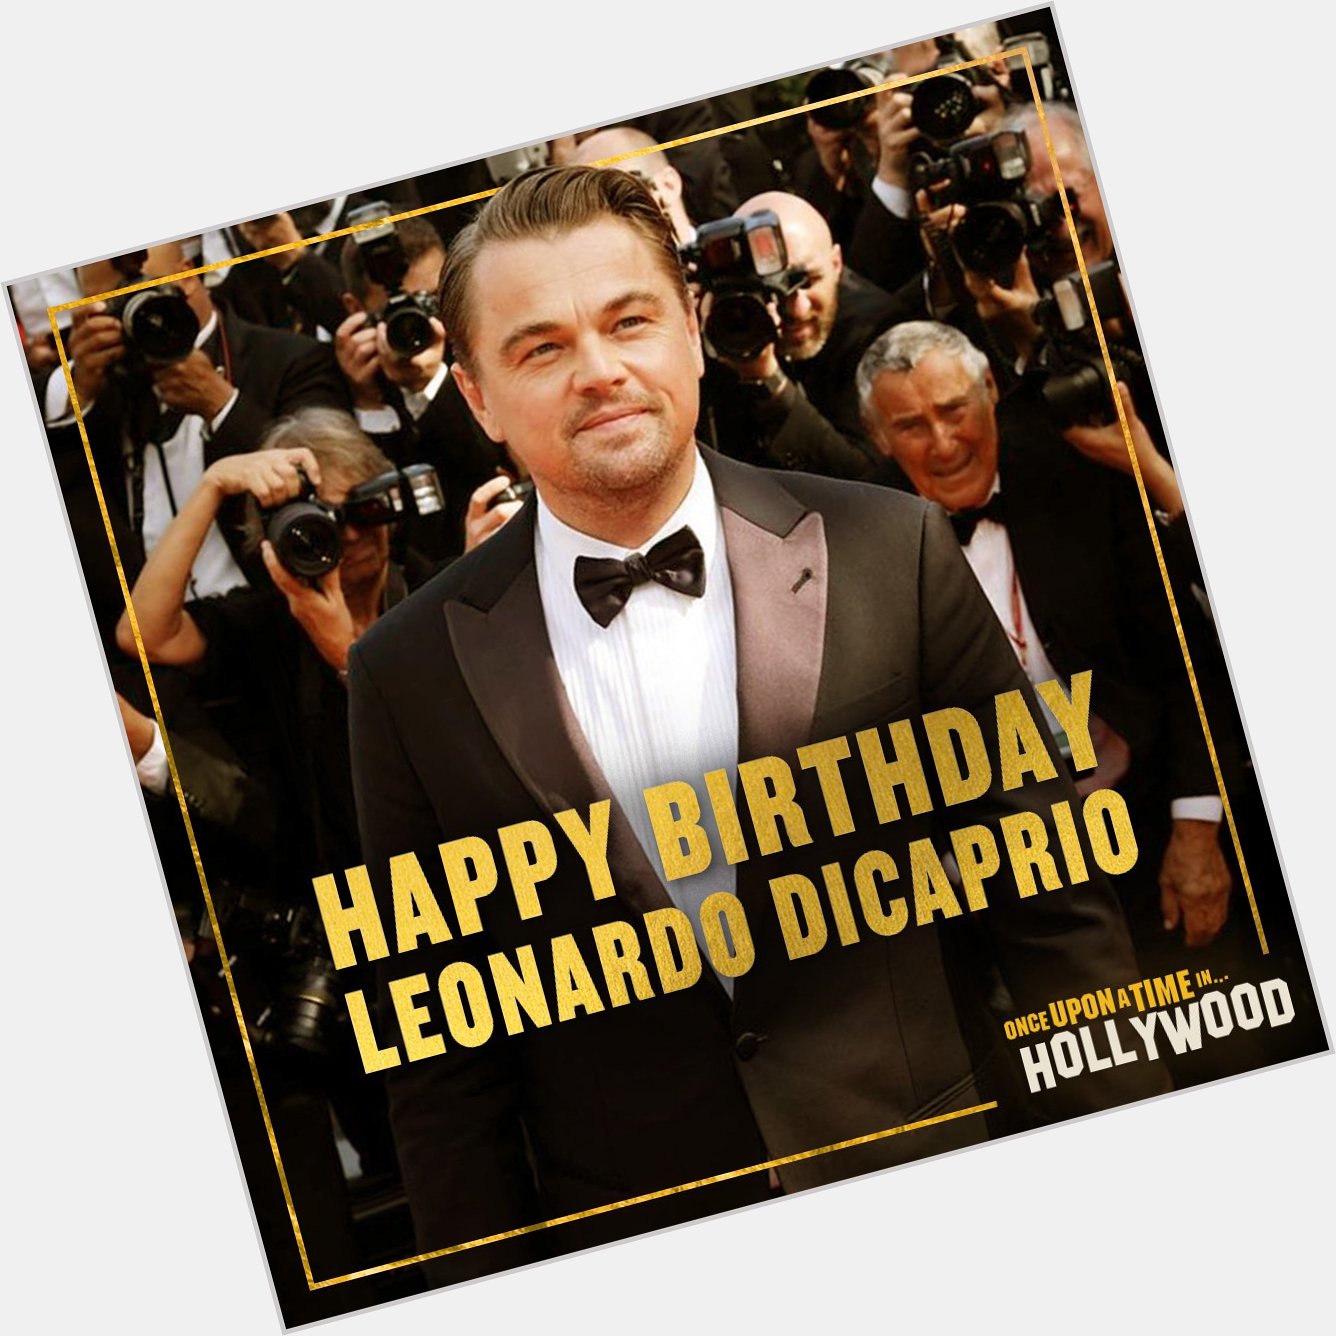 Happy birthday to Leonardo DiCaprio! 